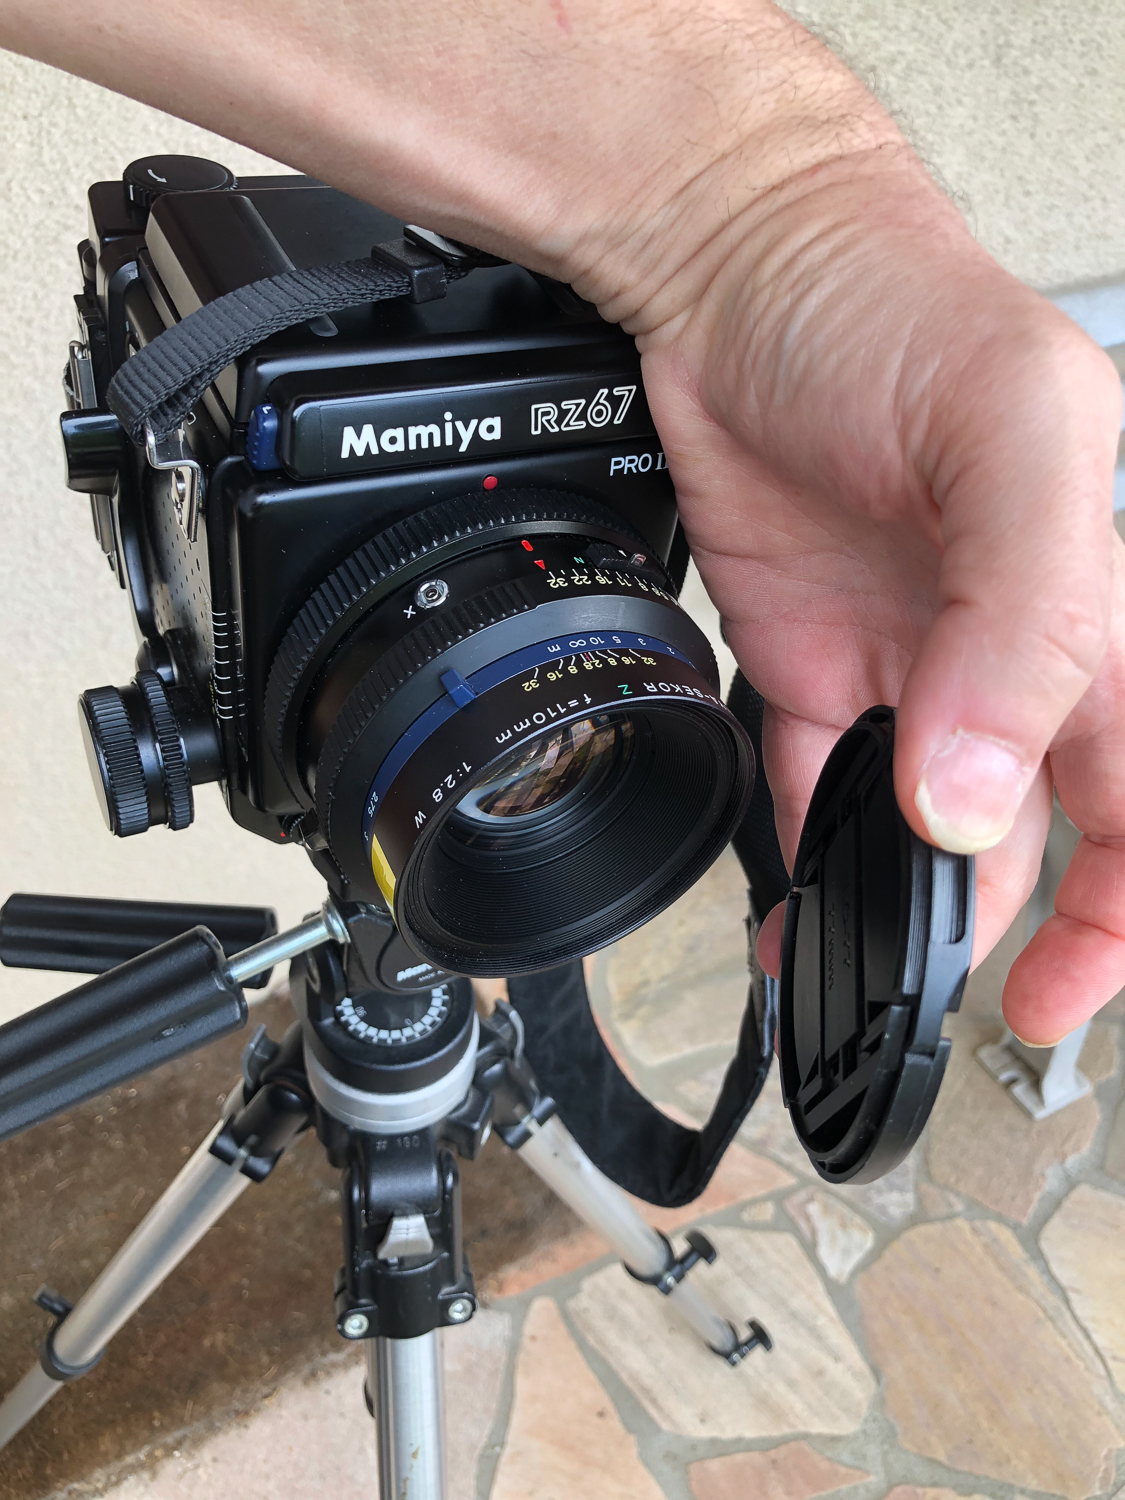 Mamiya RZ67 - remove the lens cap